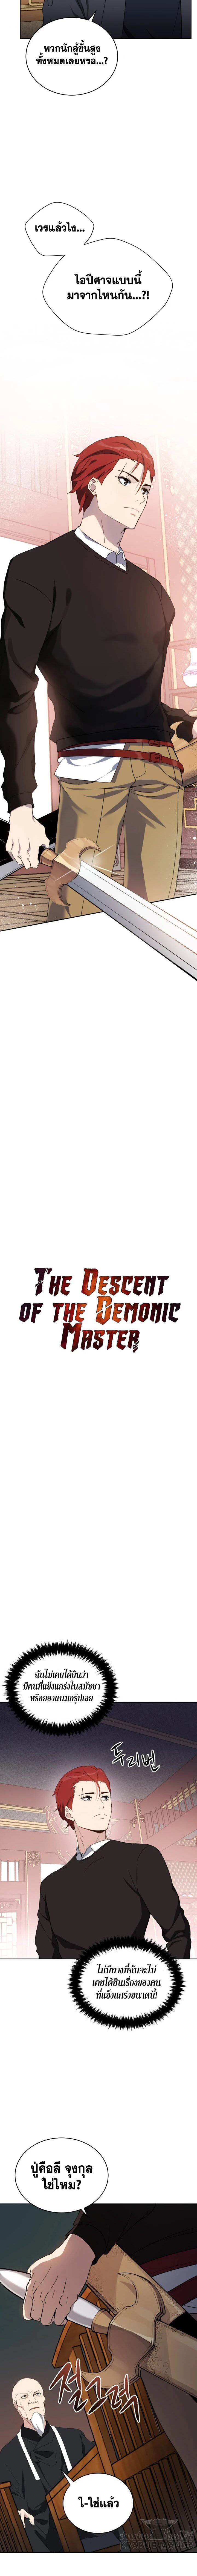 The Descent of the Demonic Maste74 (3)